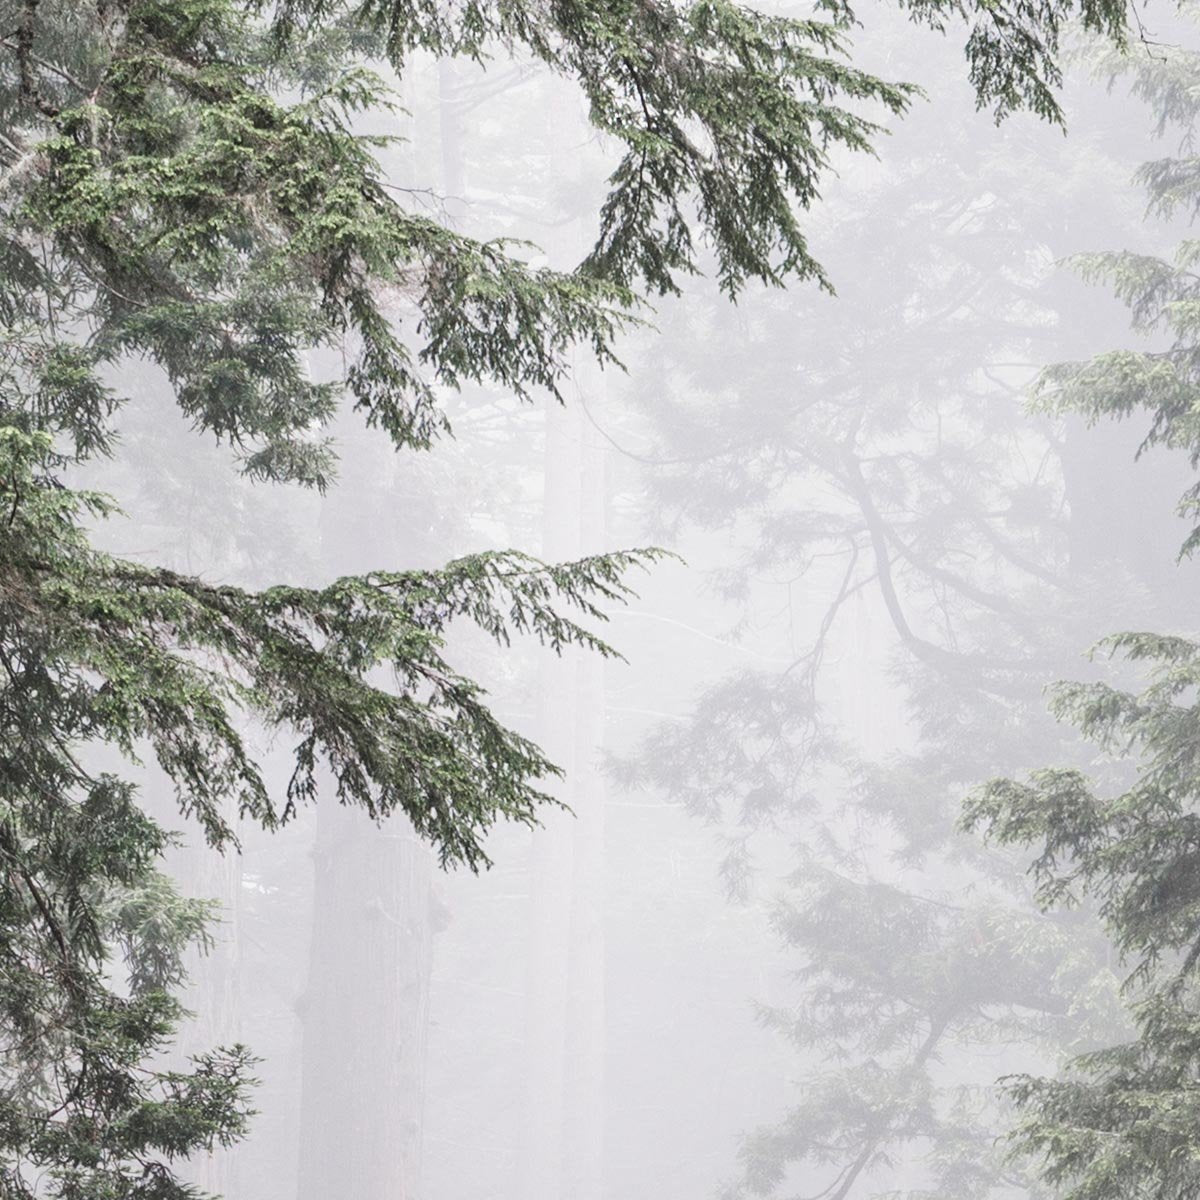 Redwood National & State Park by Carol M. Highsmith